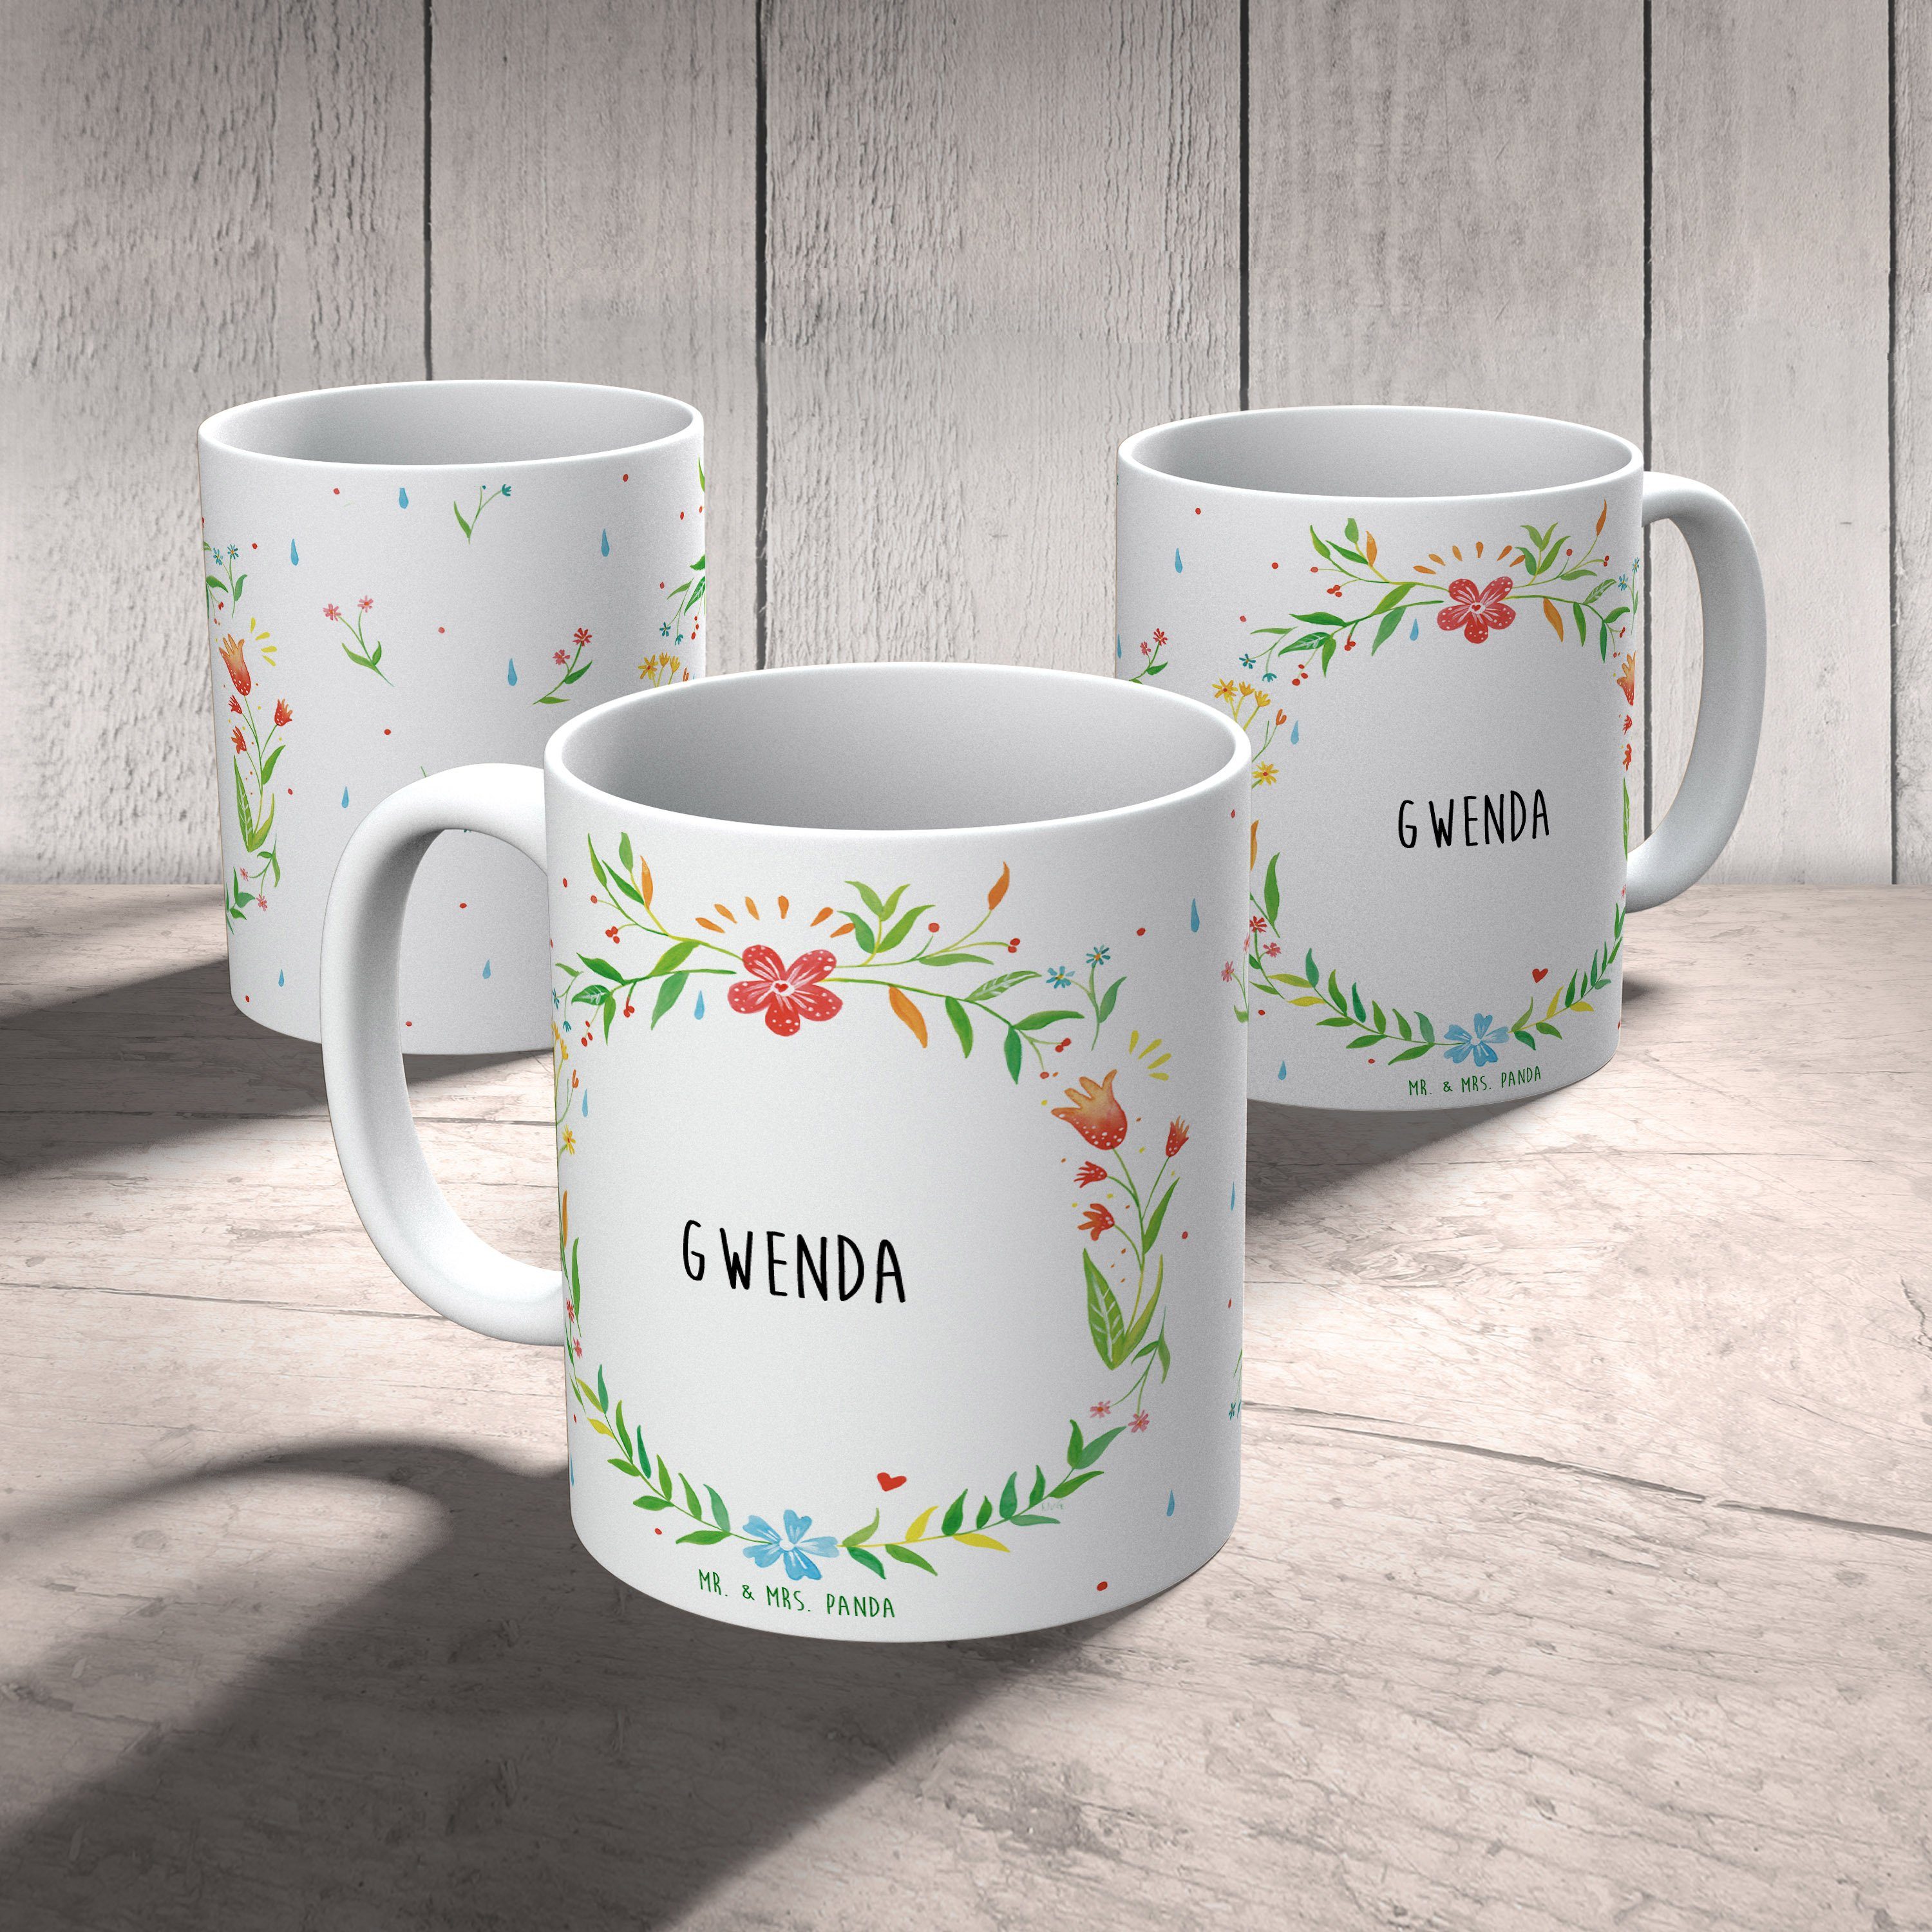 Mr. & Mrs. Panda Tasse Te, Kaffeebecher, Tasse, Geschenk, - Kaffeetasse, Keramik Gwenda Keramiktasse